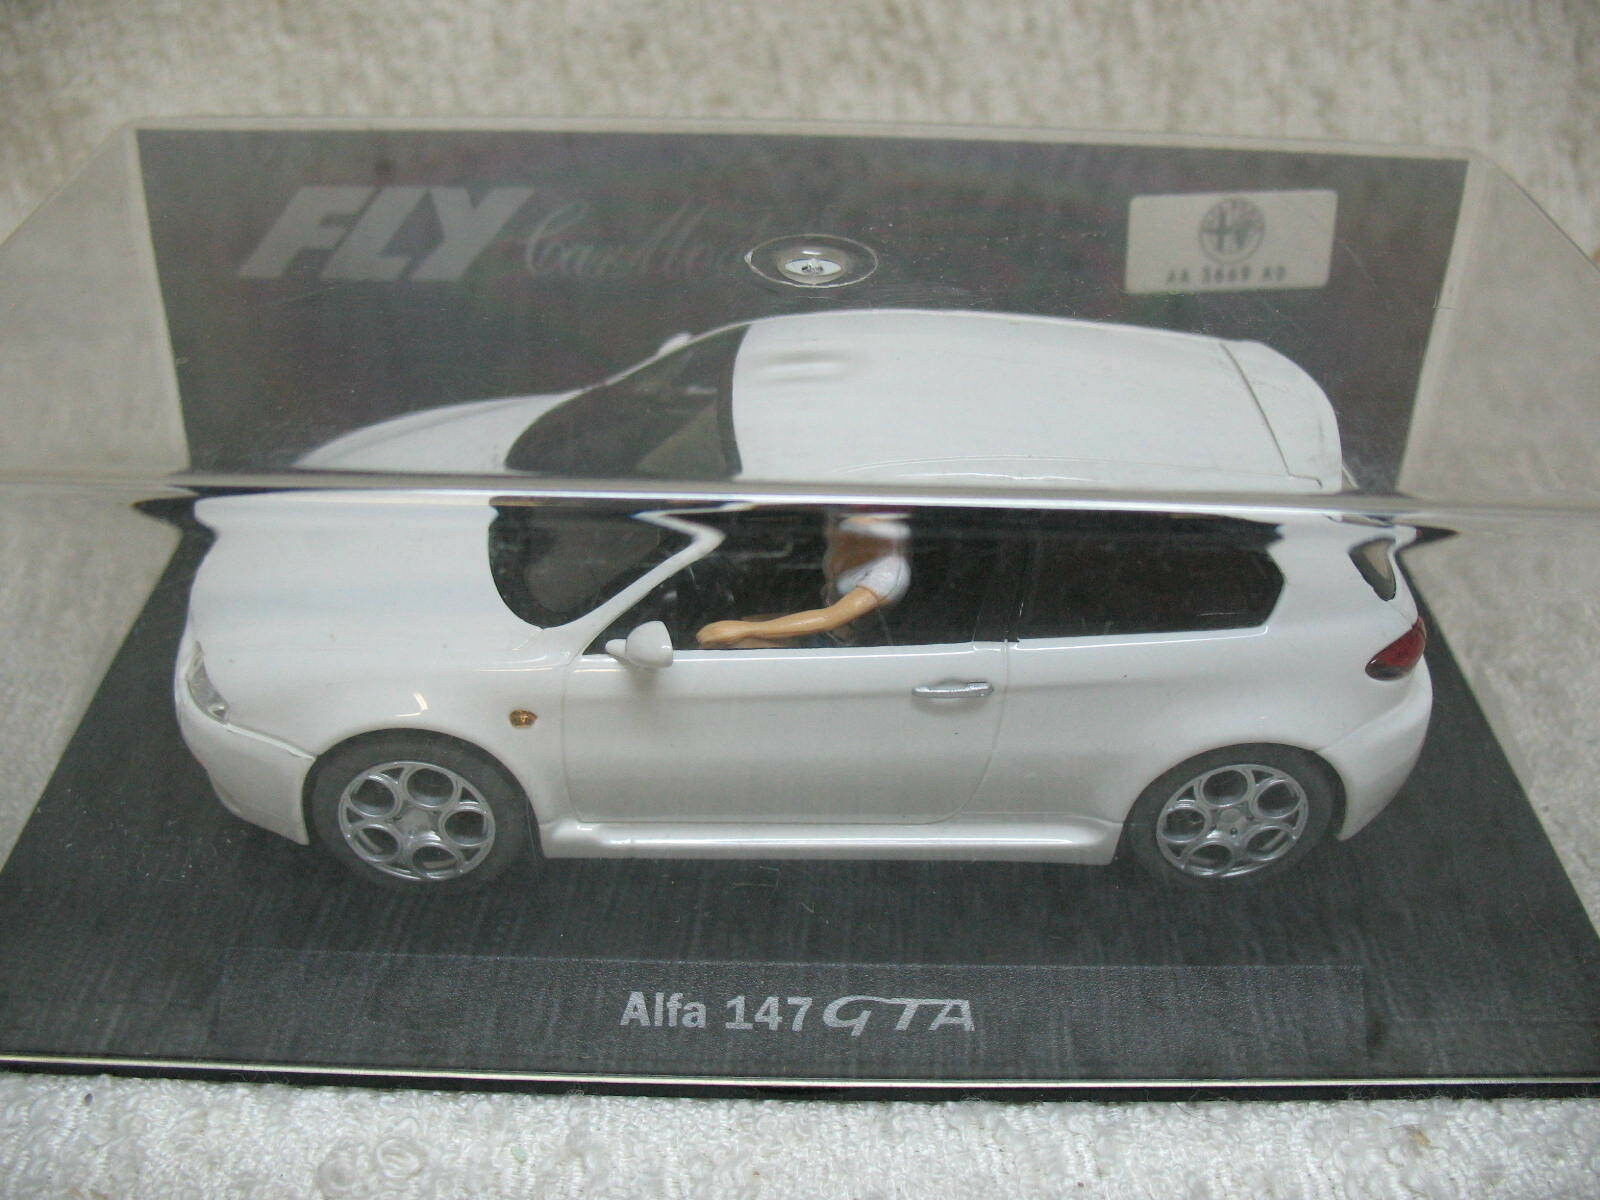 1/32 SCALE FLY 2005 ALFA 147 GTA SPORTS CAR #88105 WHITE SLOT CAR-MIB